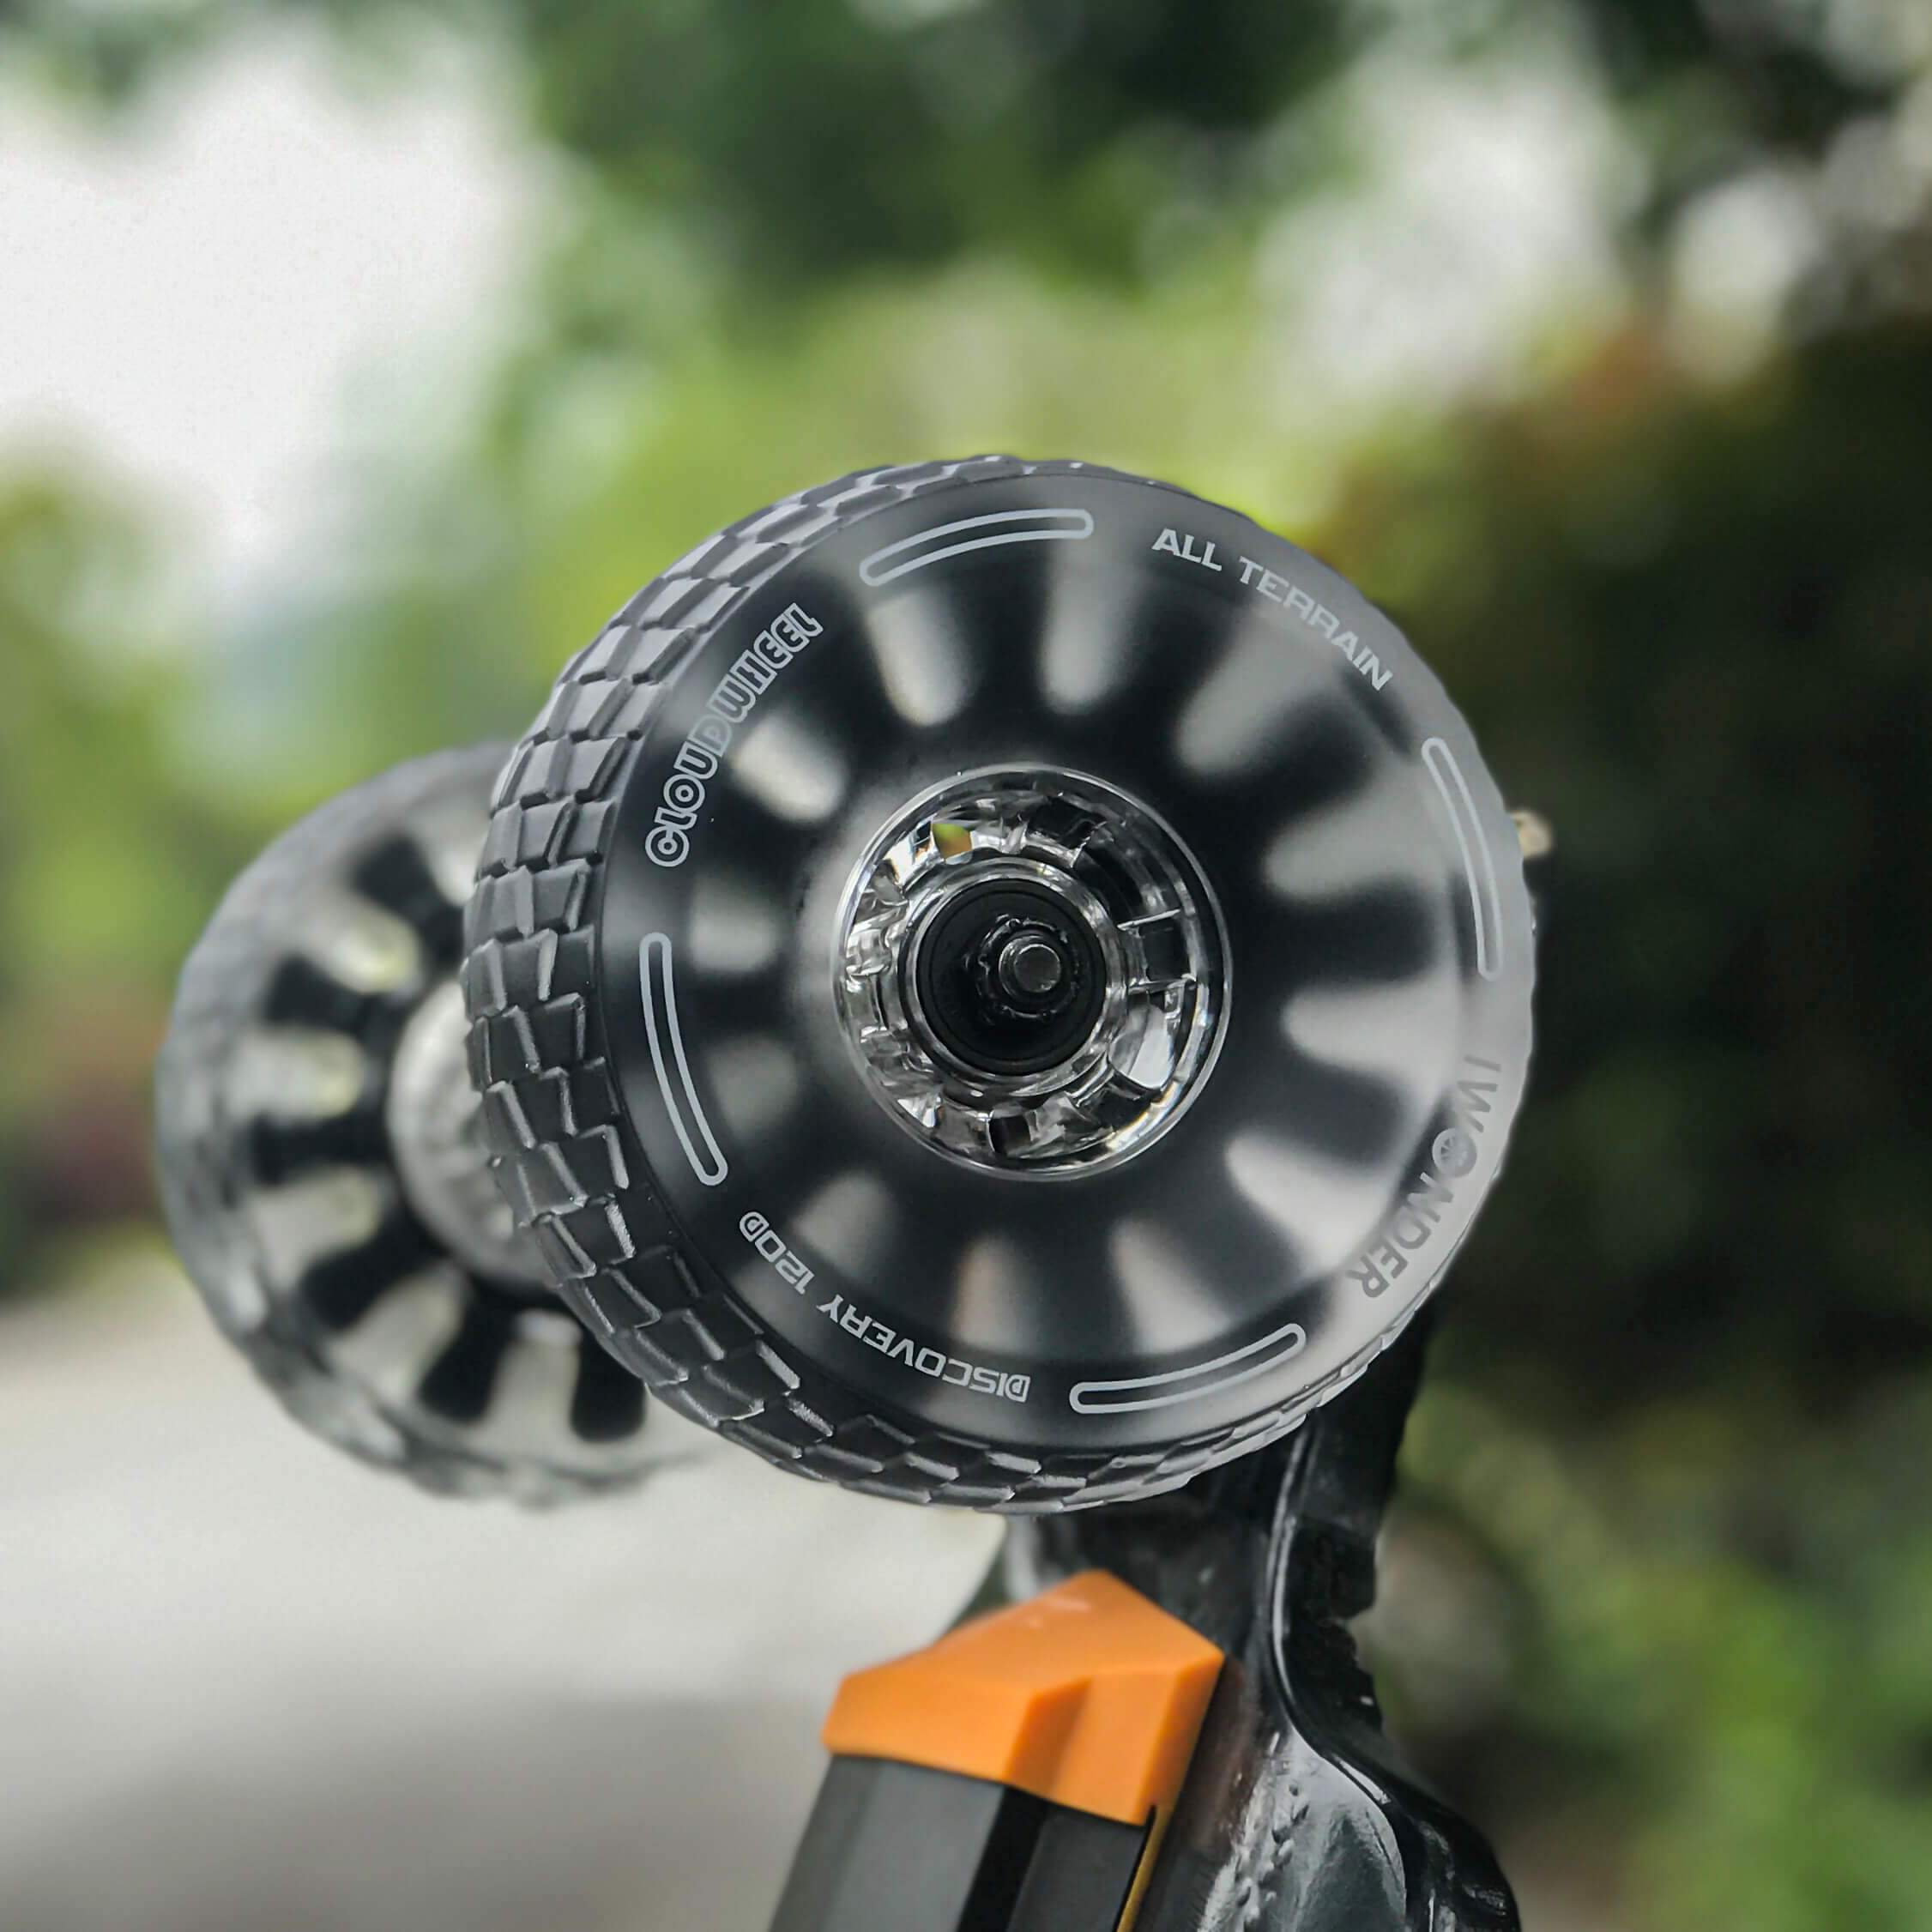 CLOUDWHEEL Discovery 120mm/105mm Urban All Terrain Off Road Electric Skateboard Wheels For WowGo Boards Wheel Pulley Kit